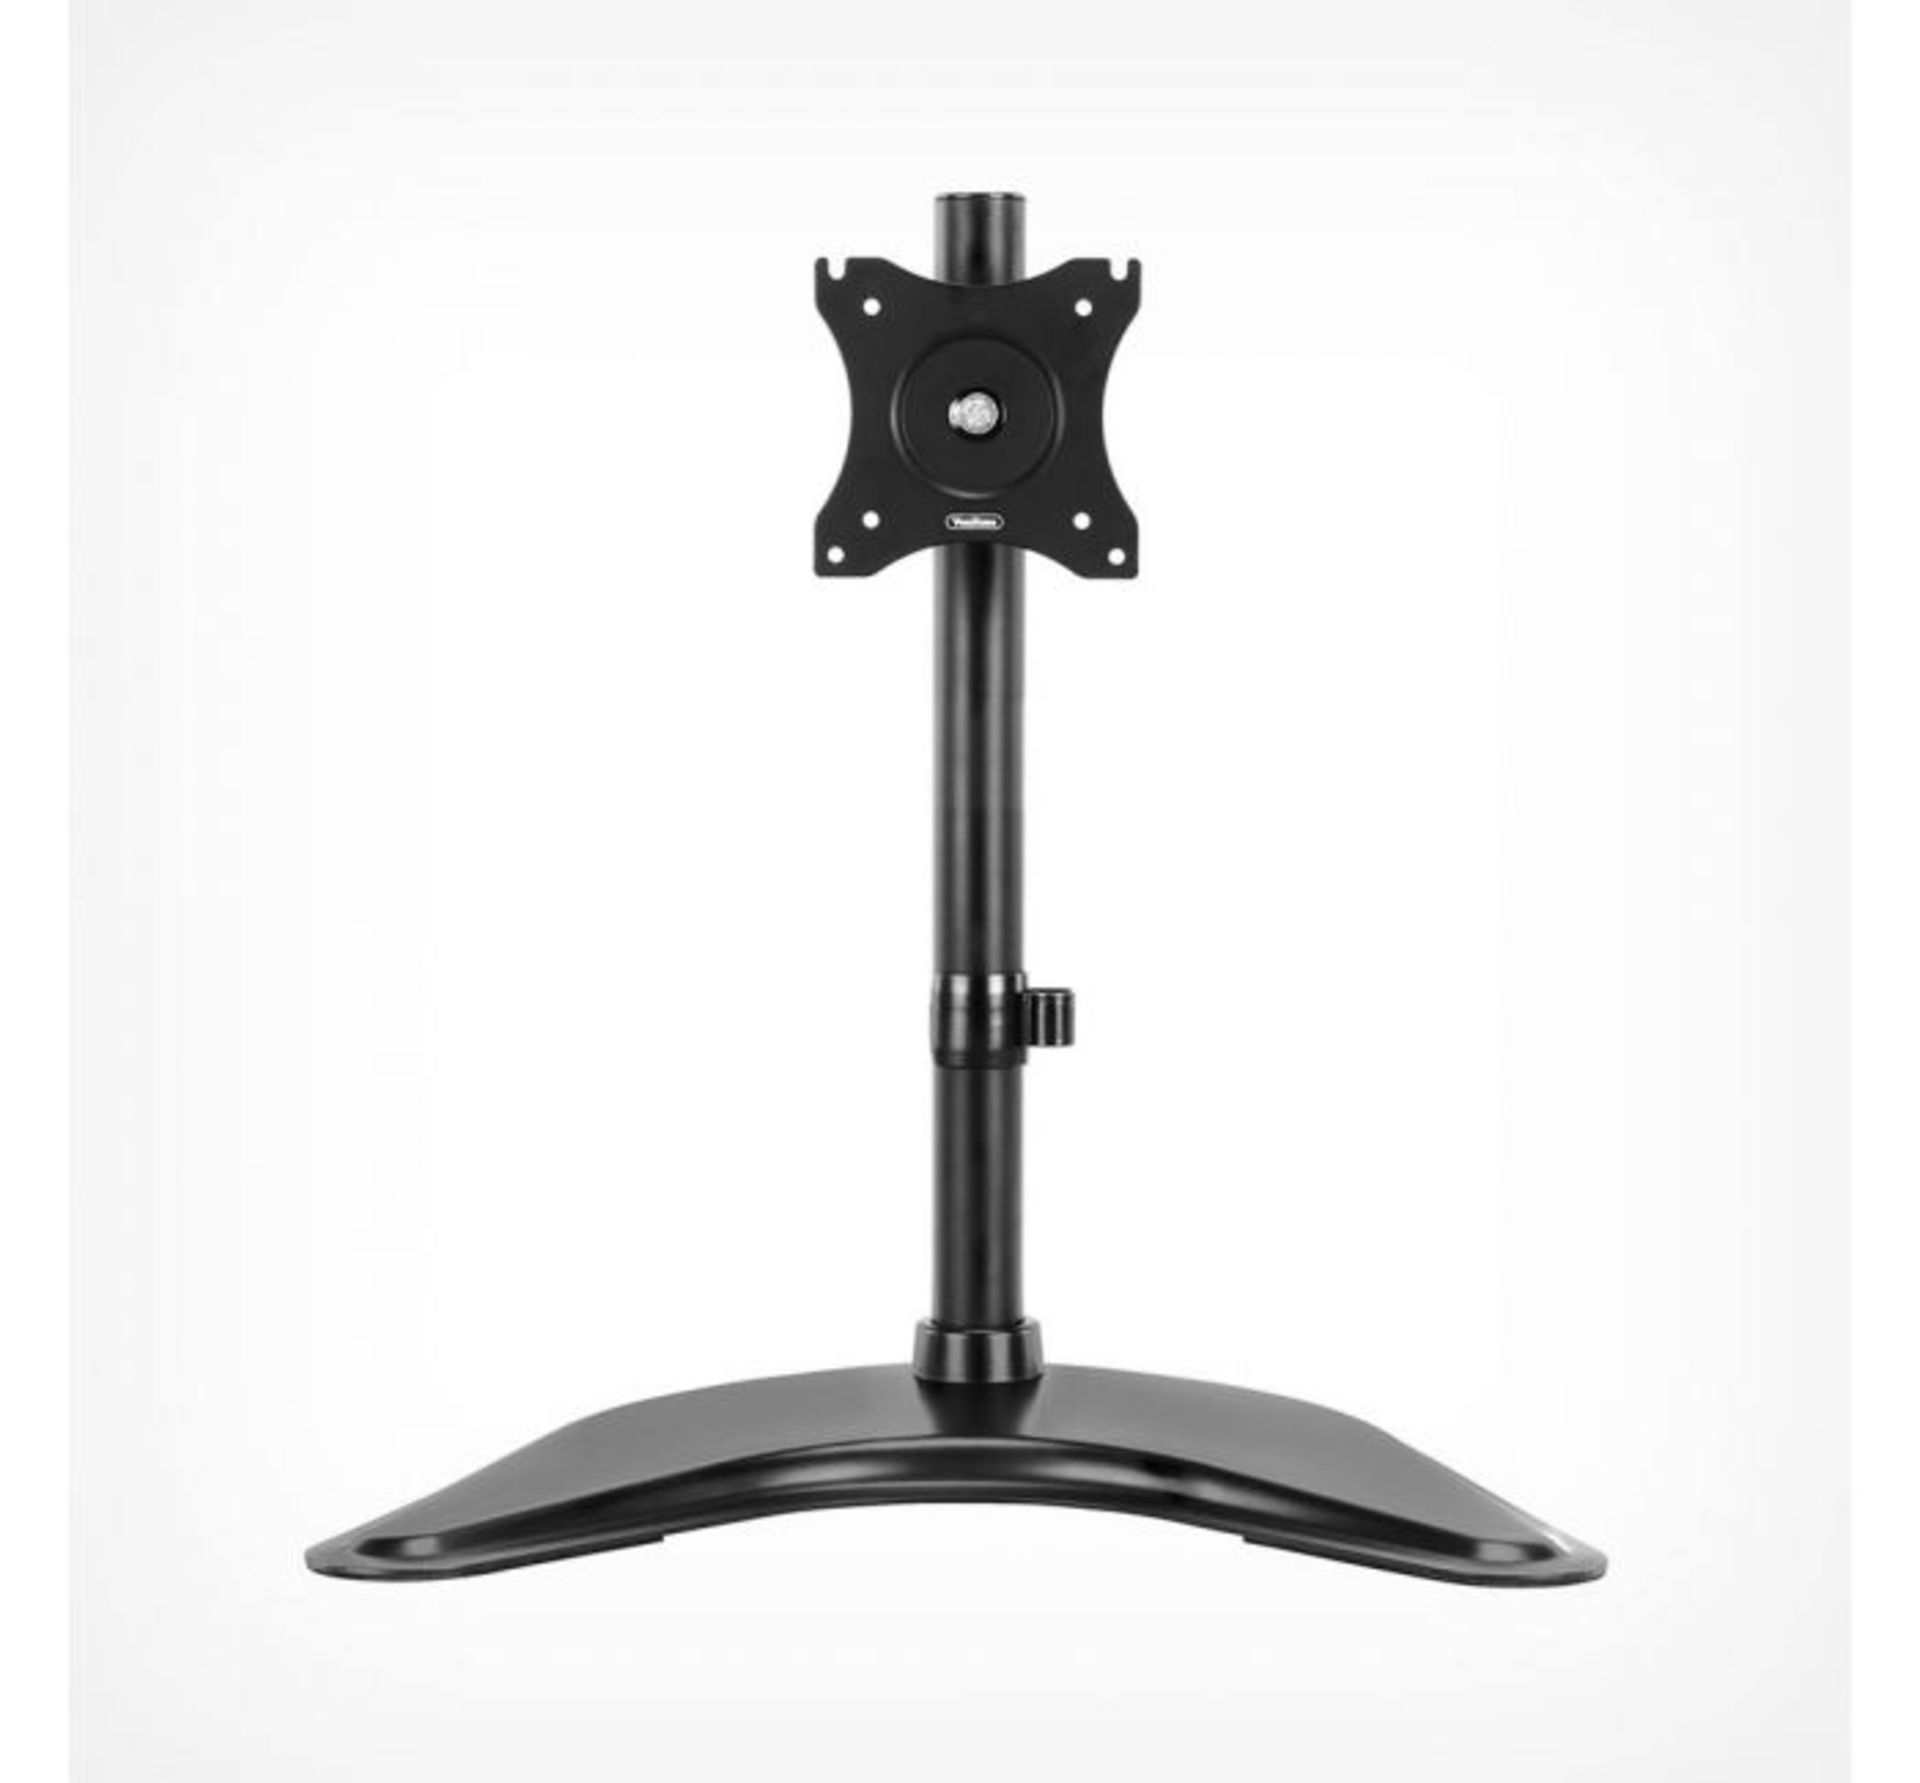 (X42) 1x Single Monitor Desk Mount. Heavy-duty single monitor mount - maximum weight capacity 10kg.